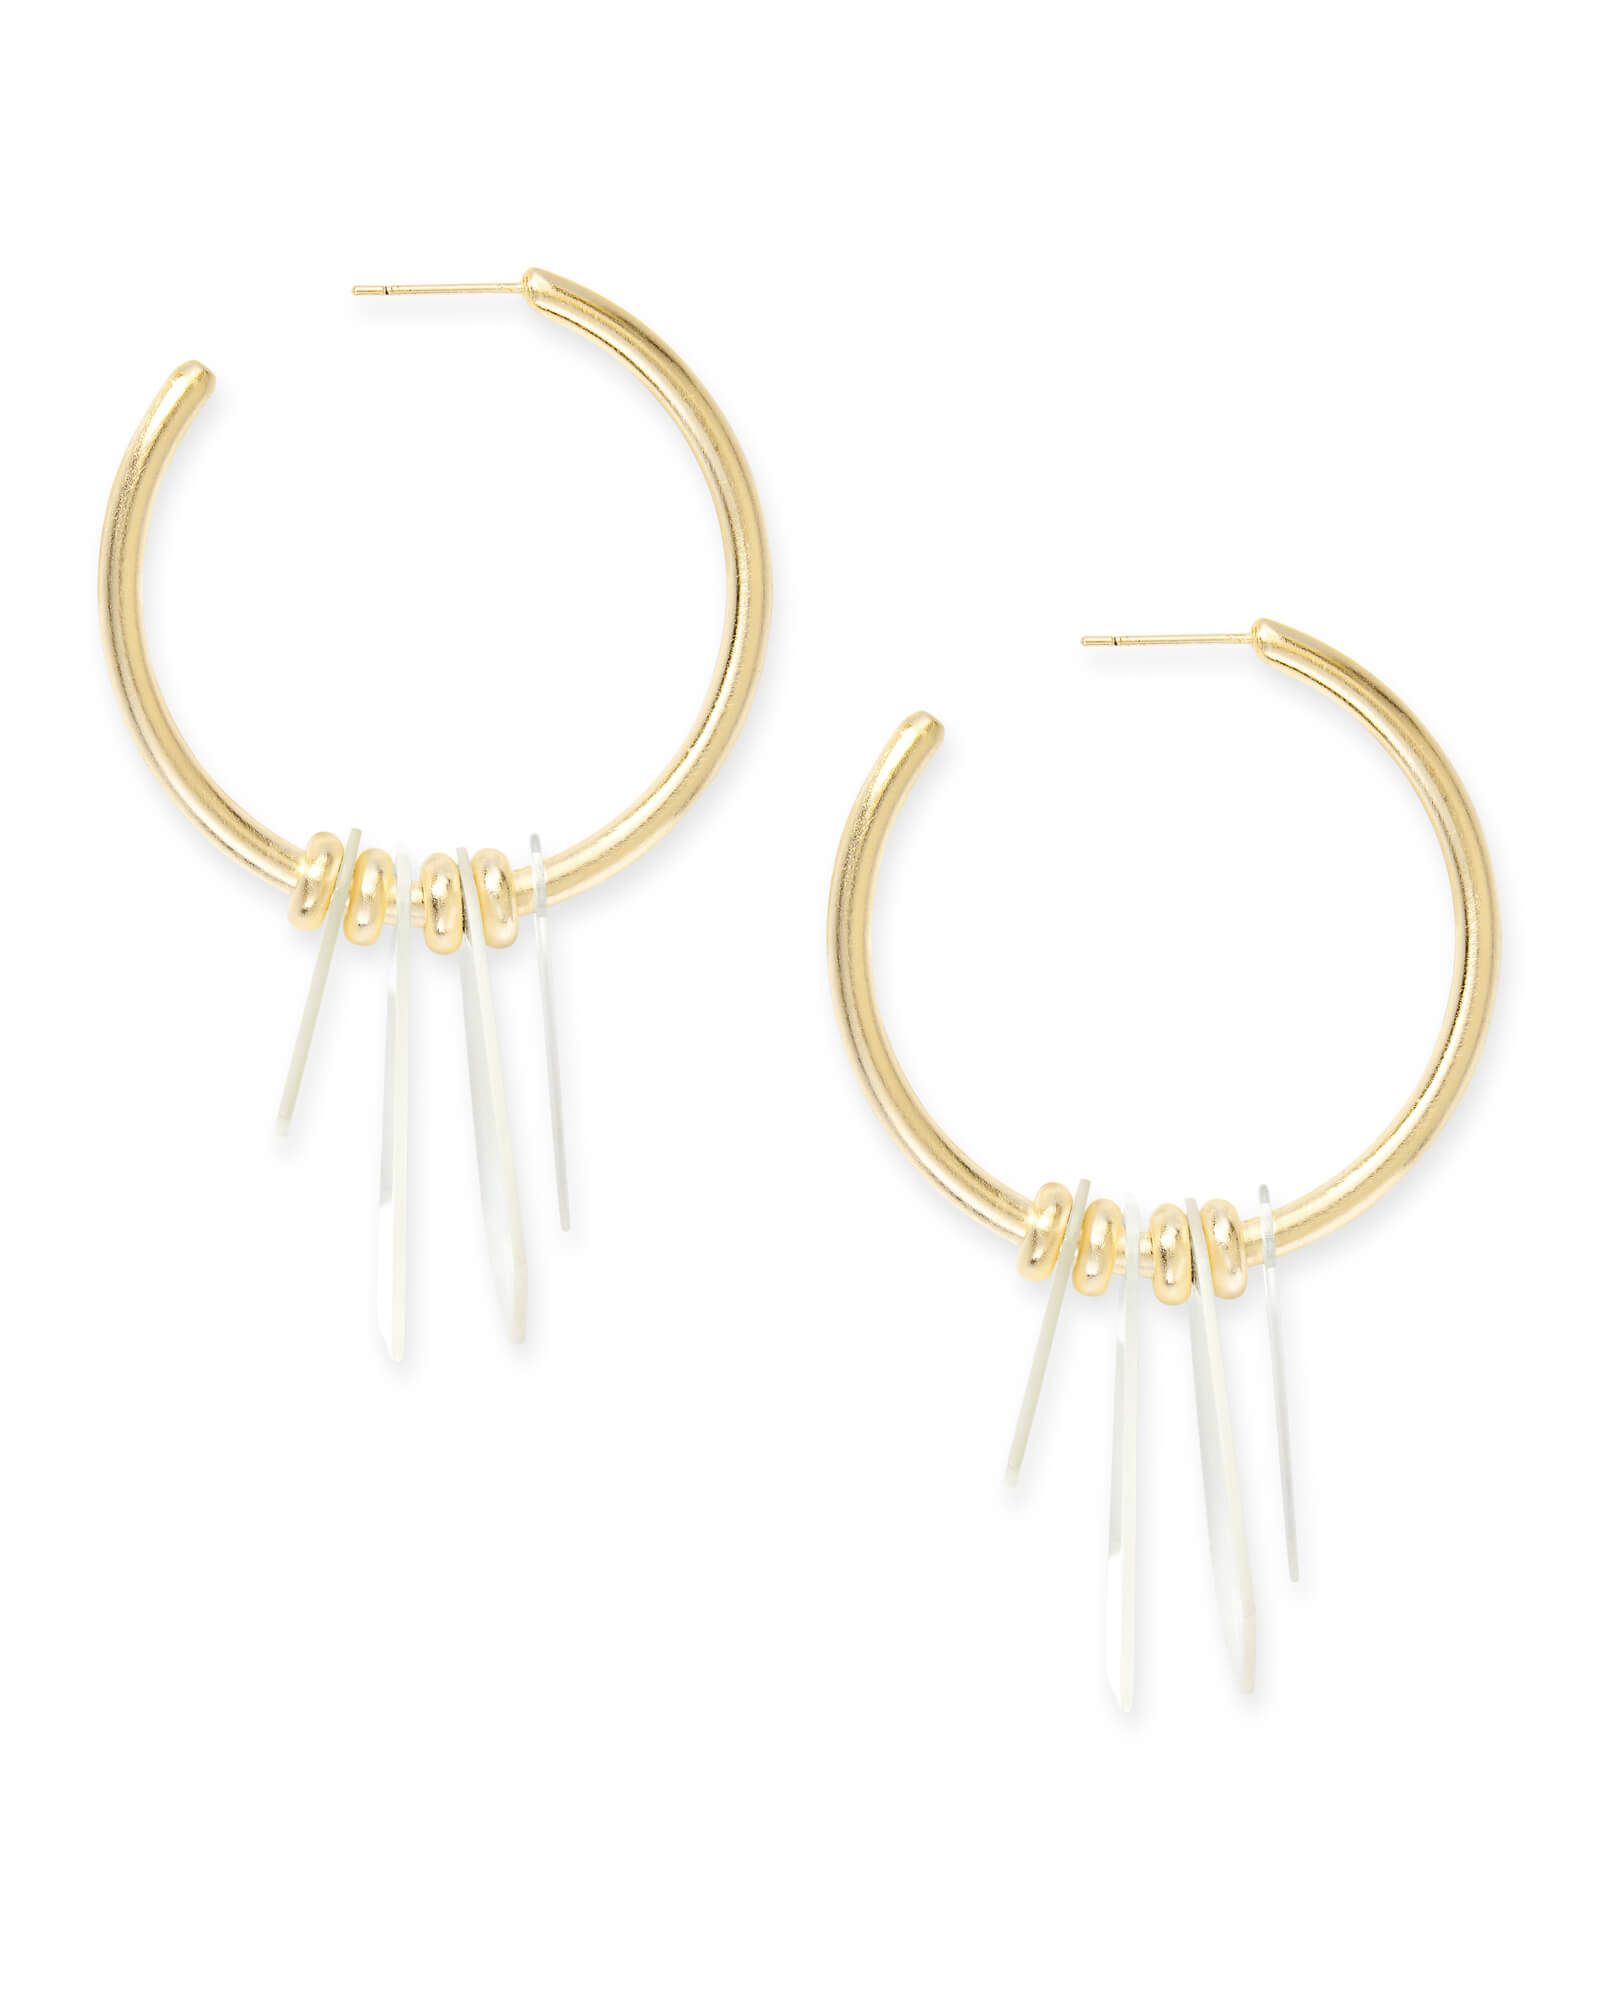 Gaby Gold Statement Earrings in Ivory Mix | Kendra Scott